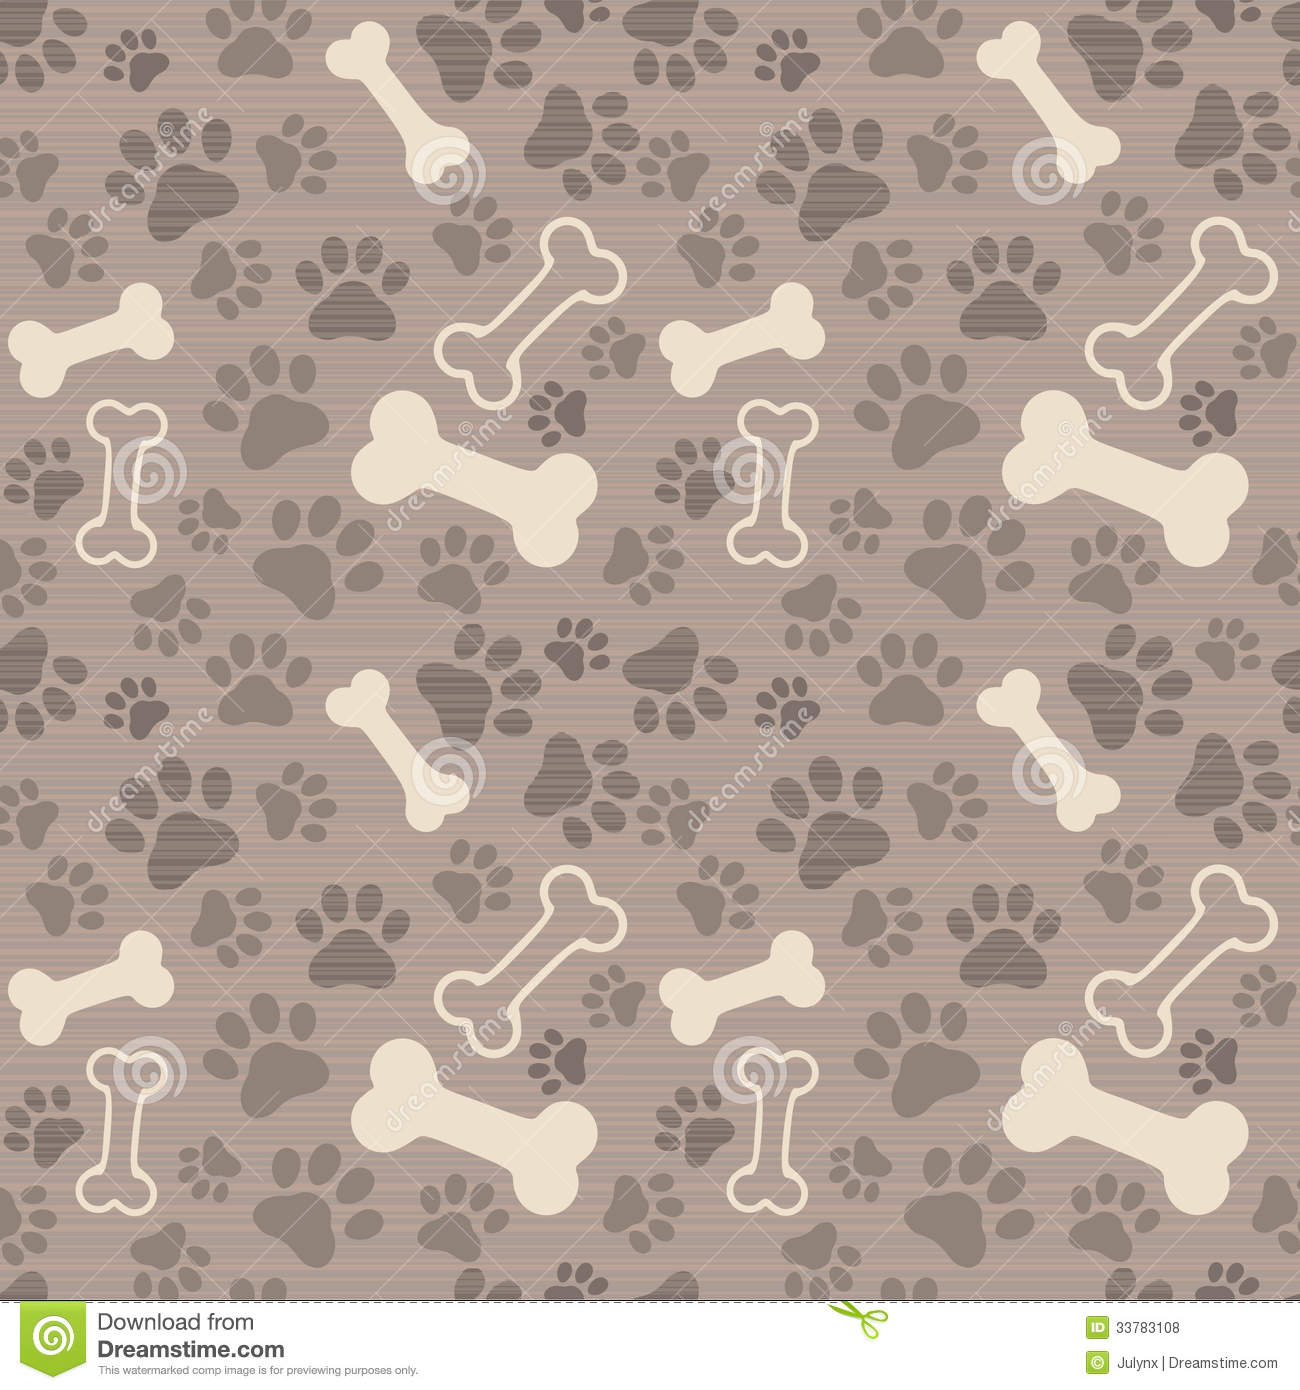 Dog Bones Wallpaper Seamless Background Paw